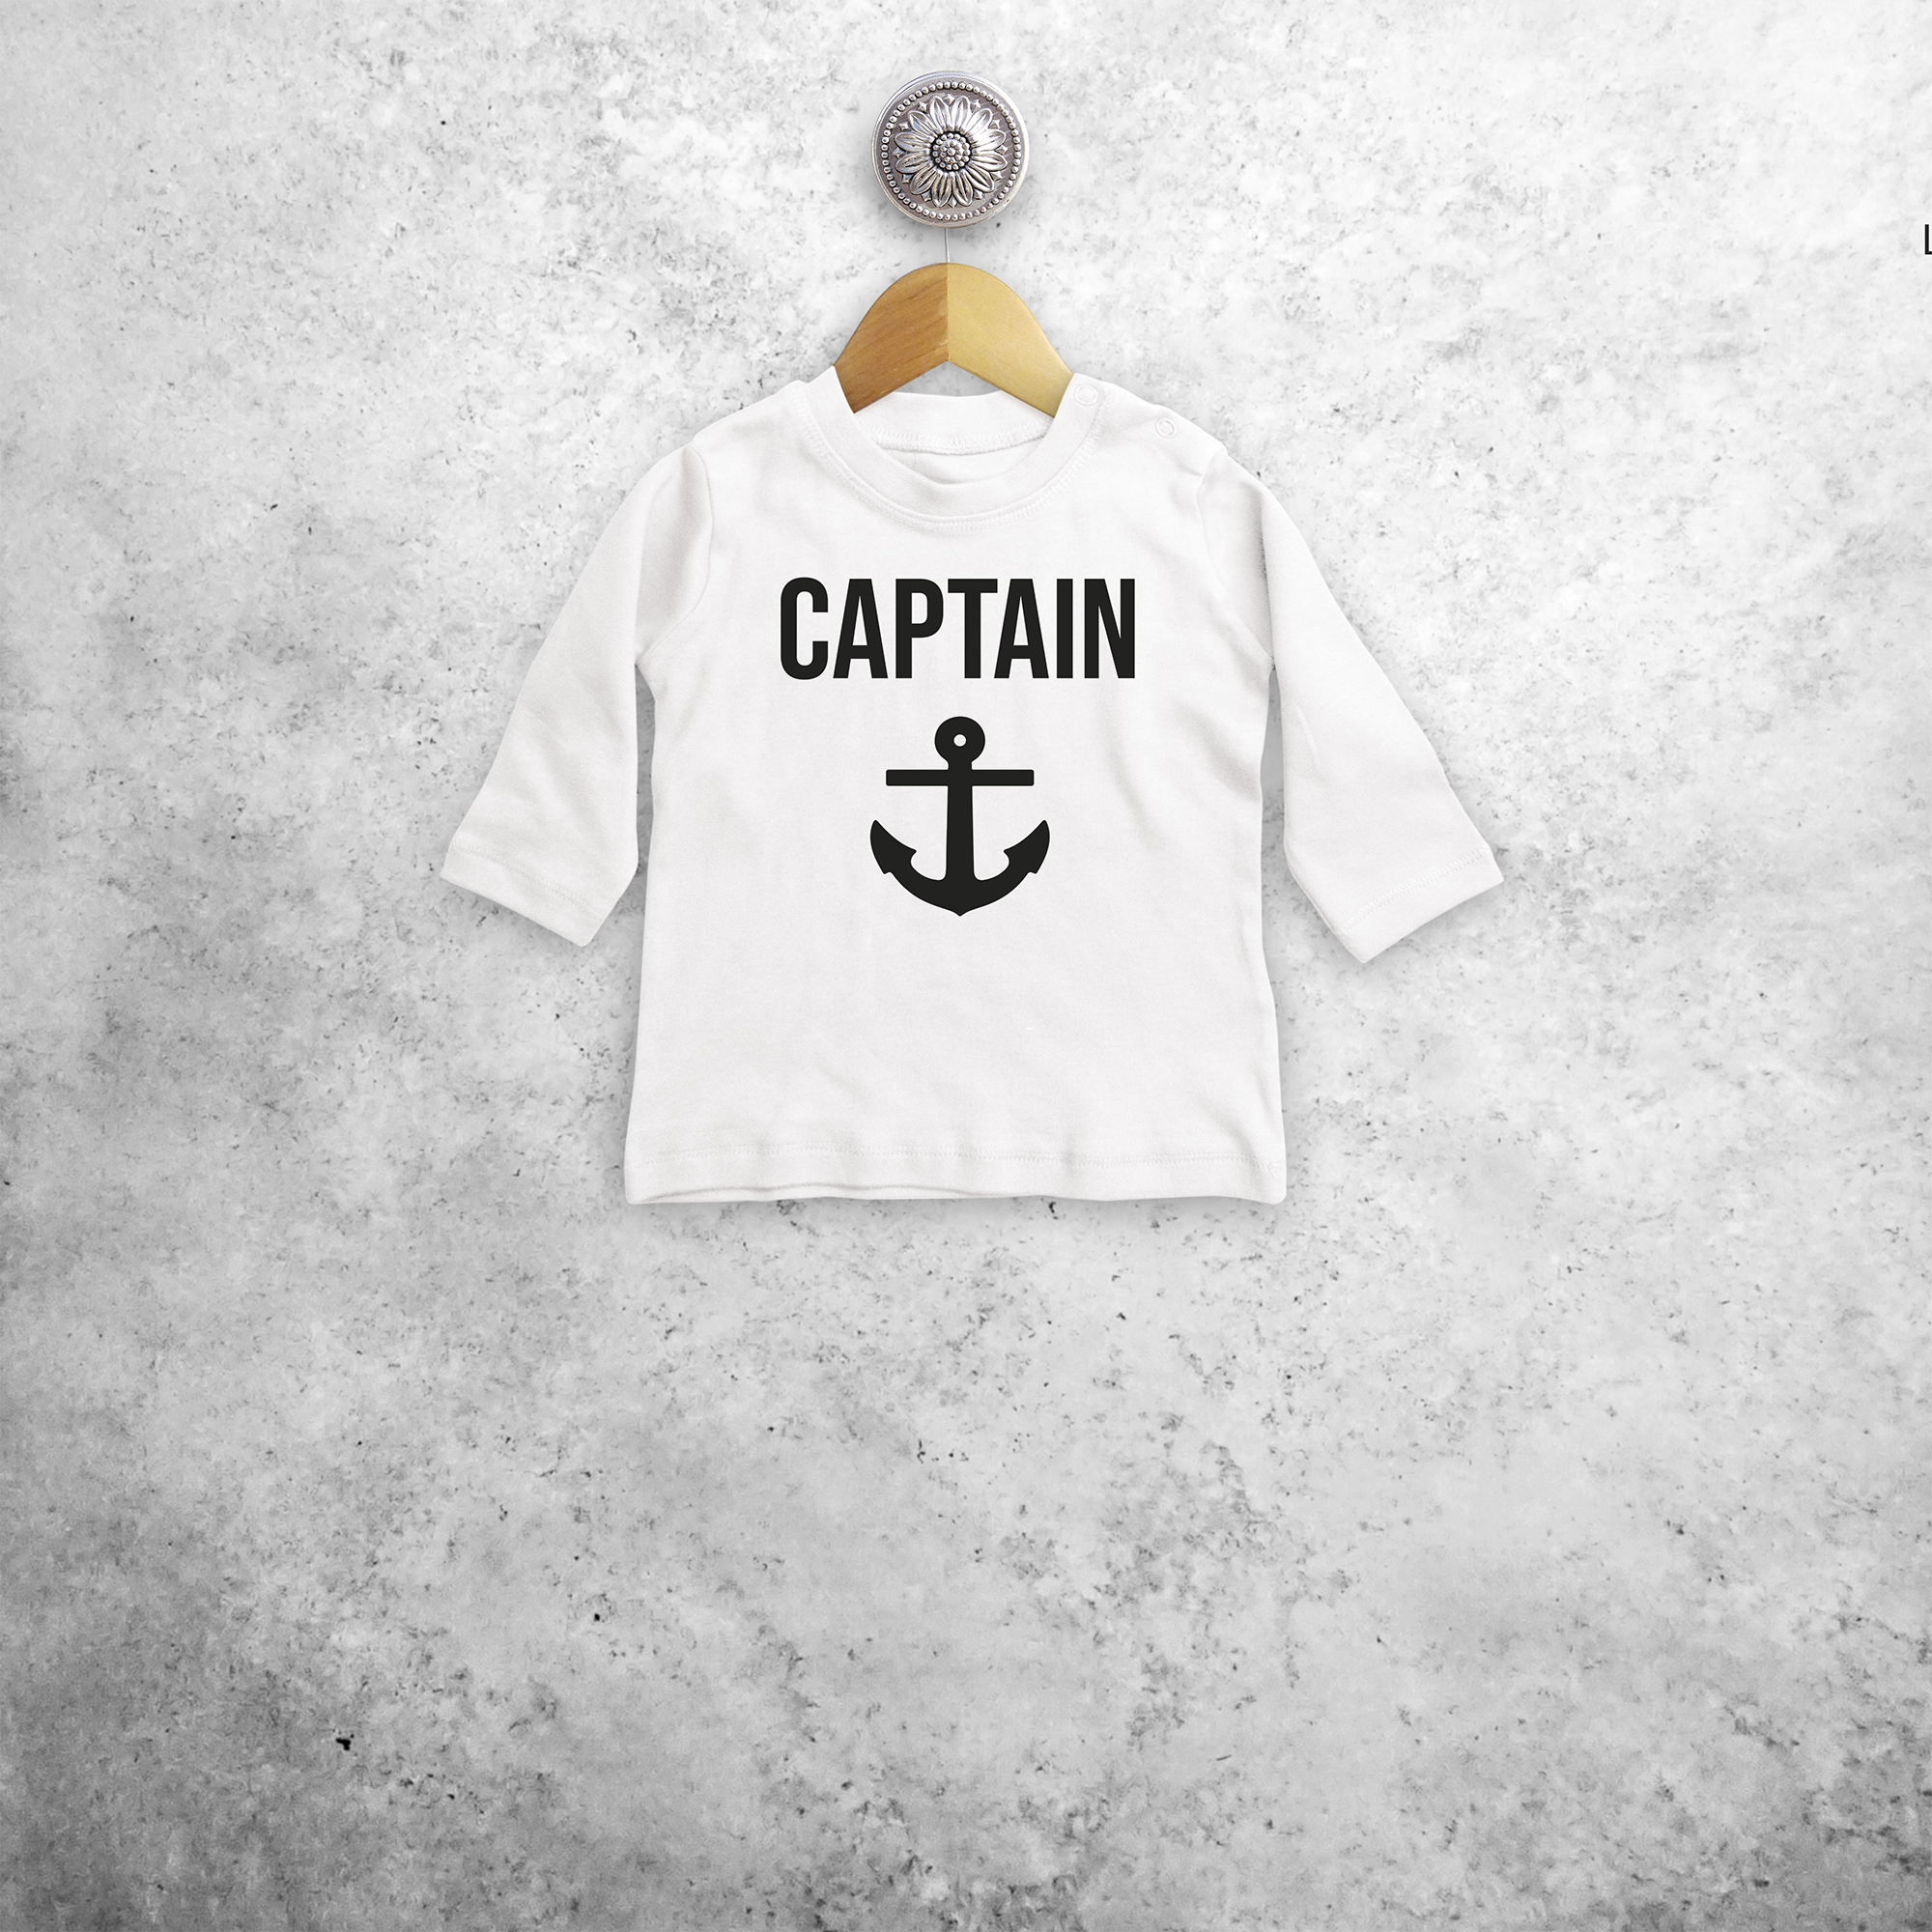 'Captain' baby longsleeve shirt